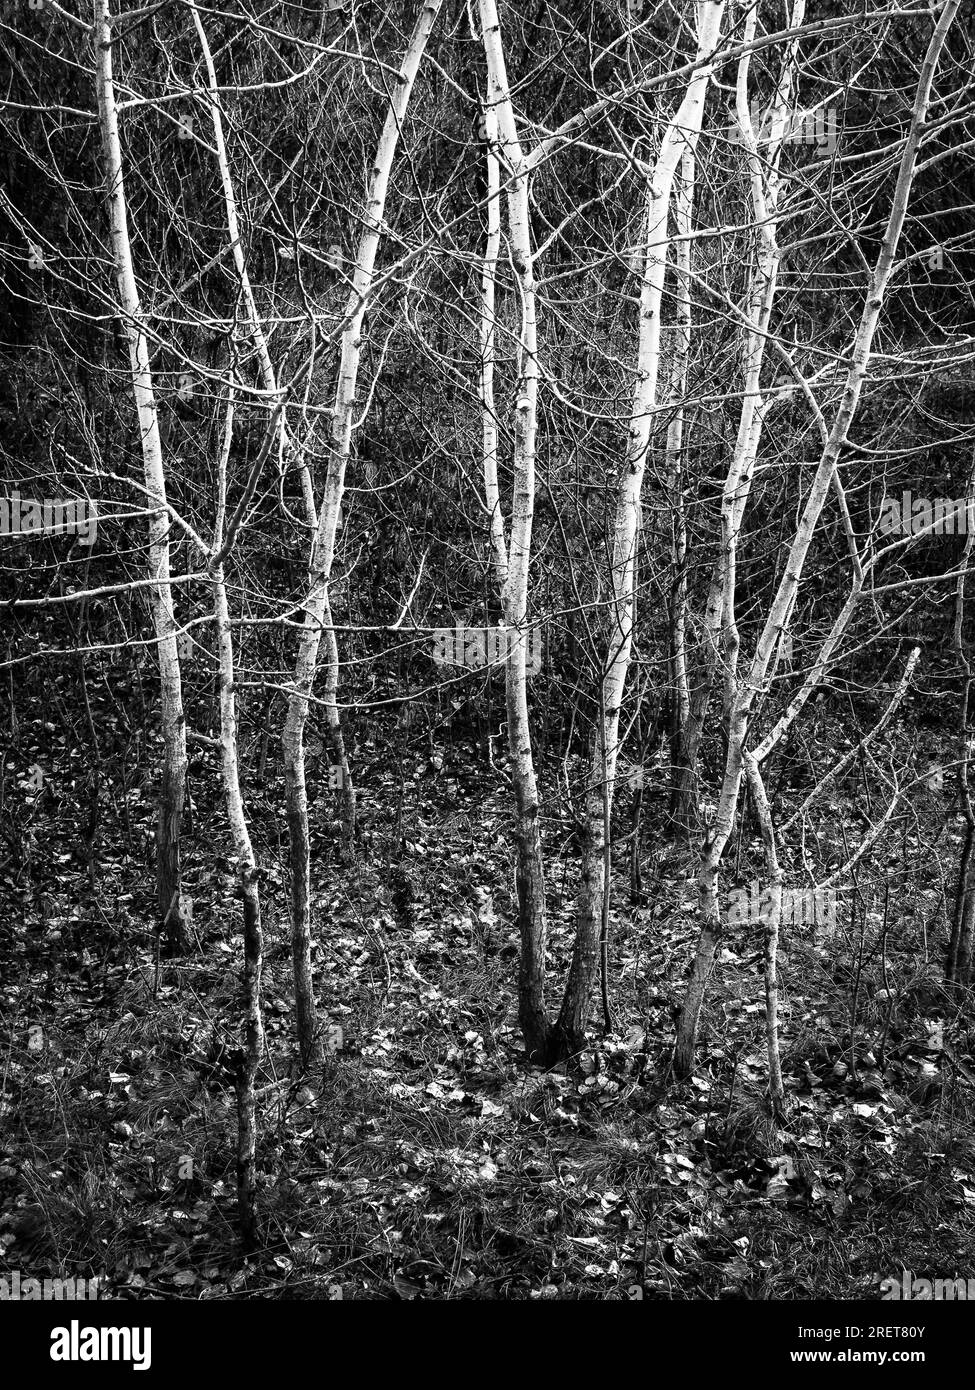 Blac kand alberi bianchi in una foresta Foto Stock